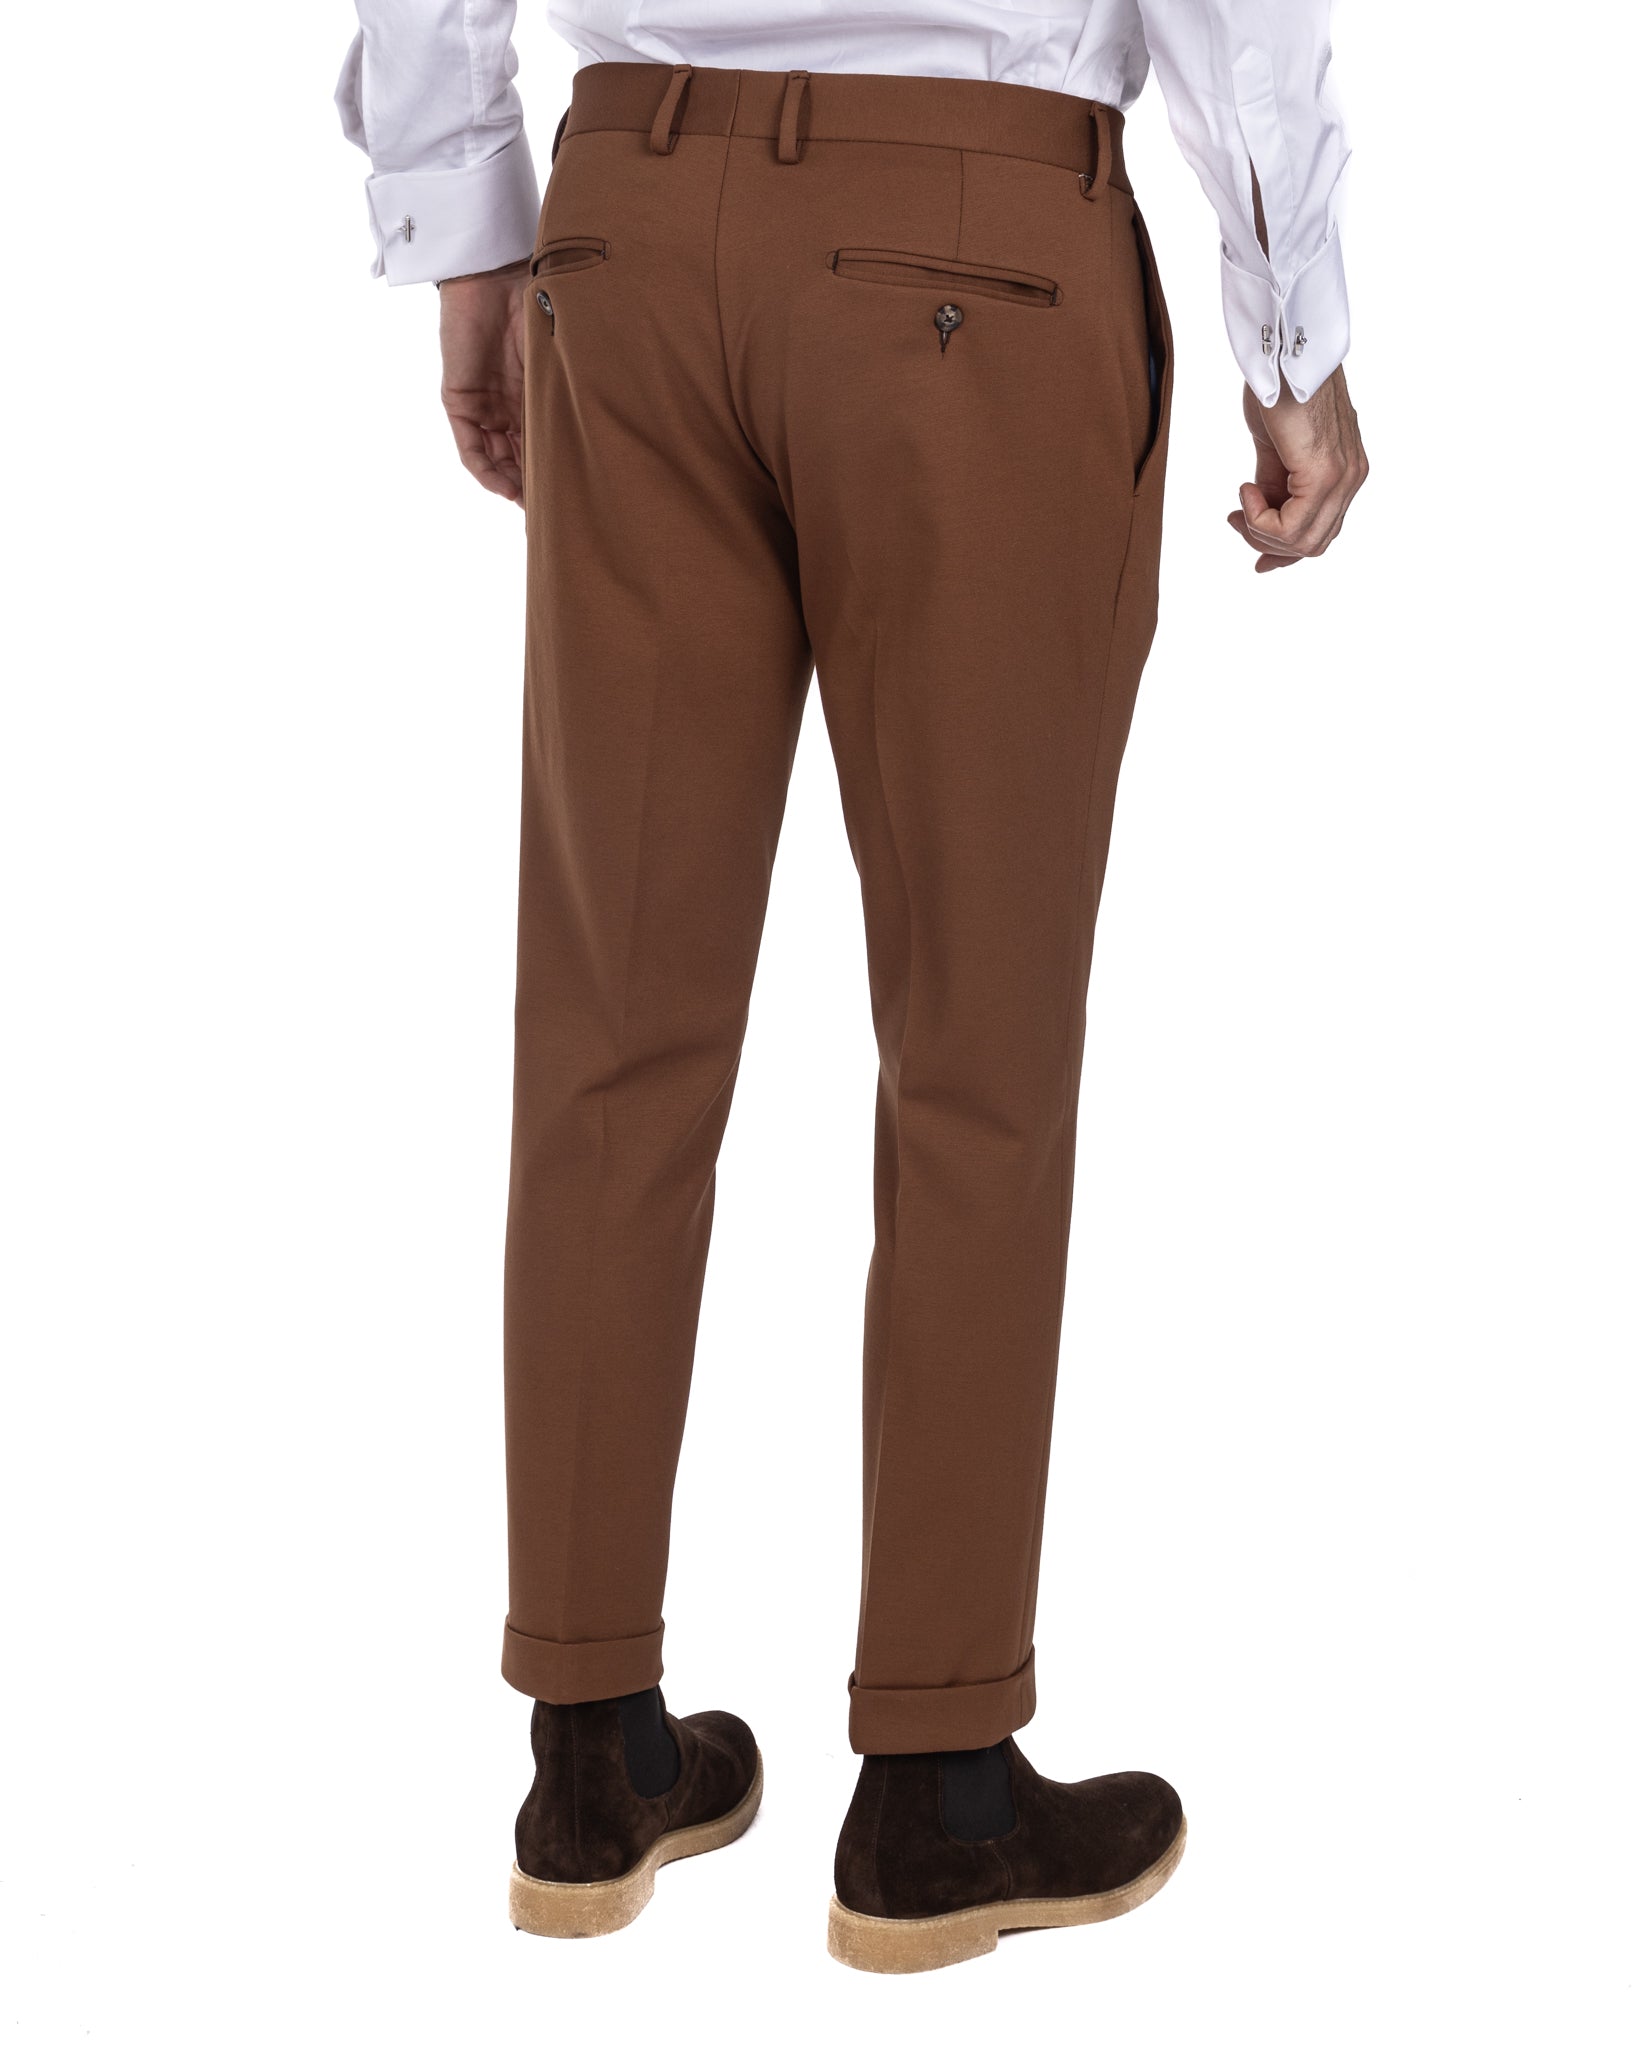 Firenze - dark brown tailored trousers in Milan stitch